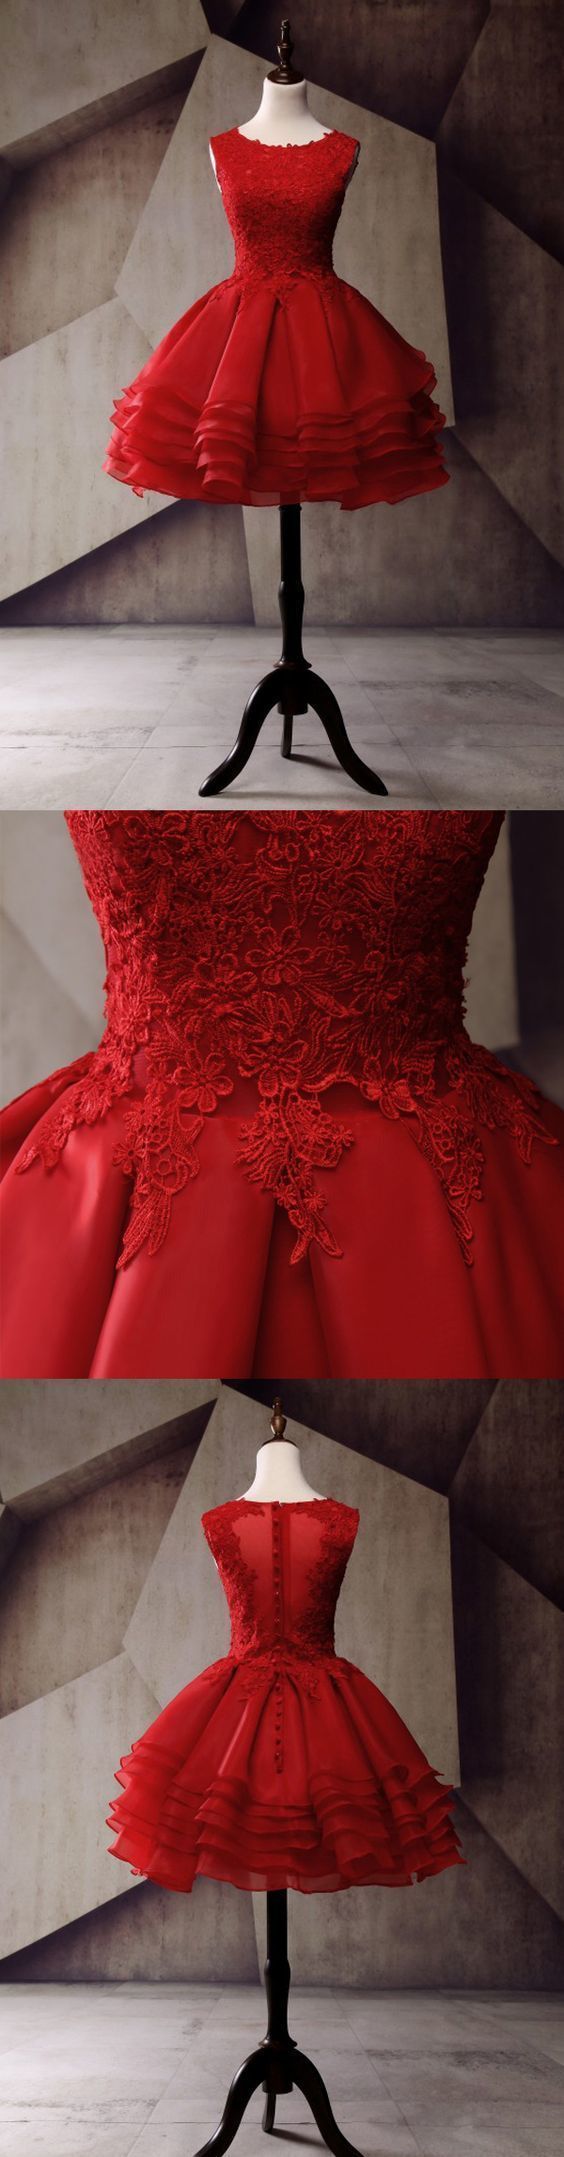 Lace Homecoming Dress, Applique Junior School Dress, Red Graduation Dress cg1101